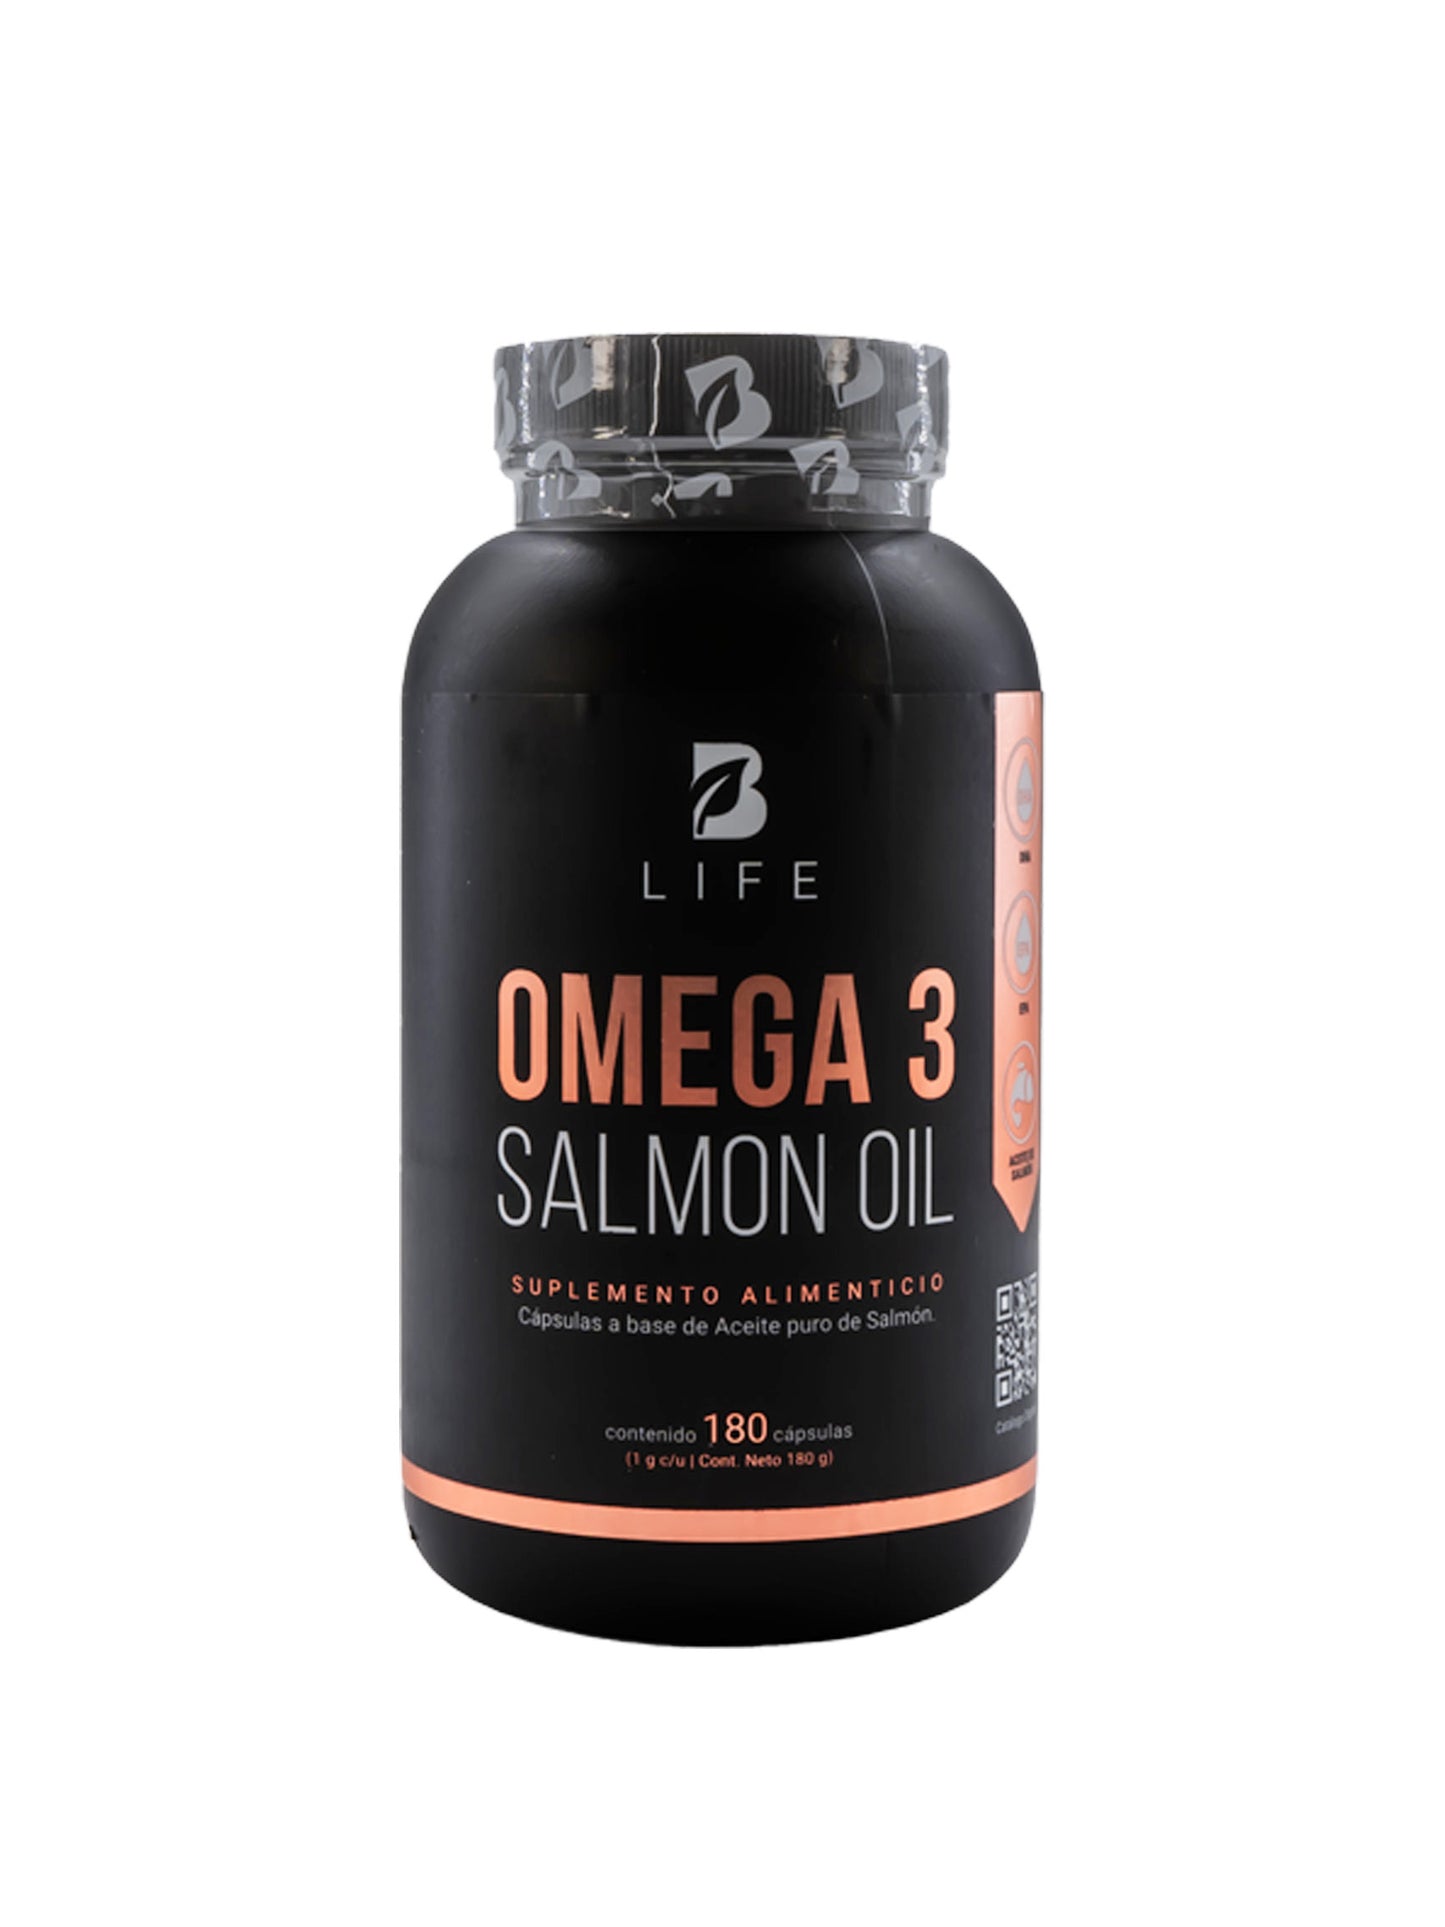 Omega 3 - Salmon Oil